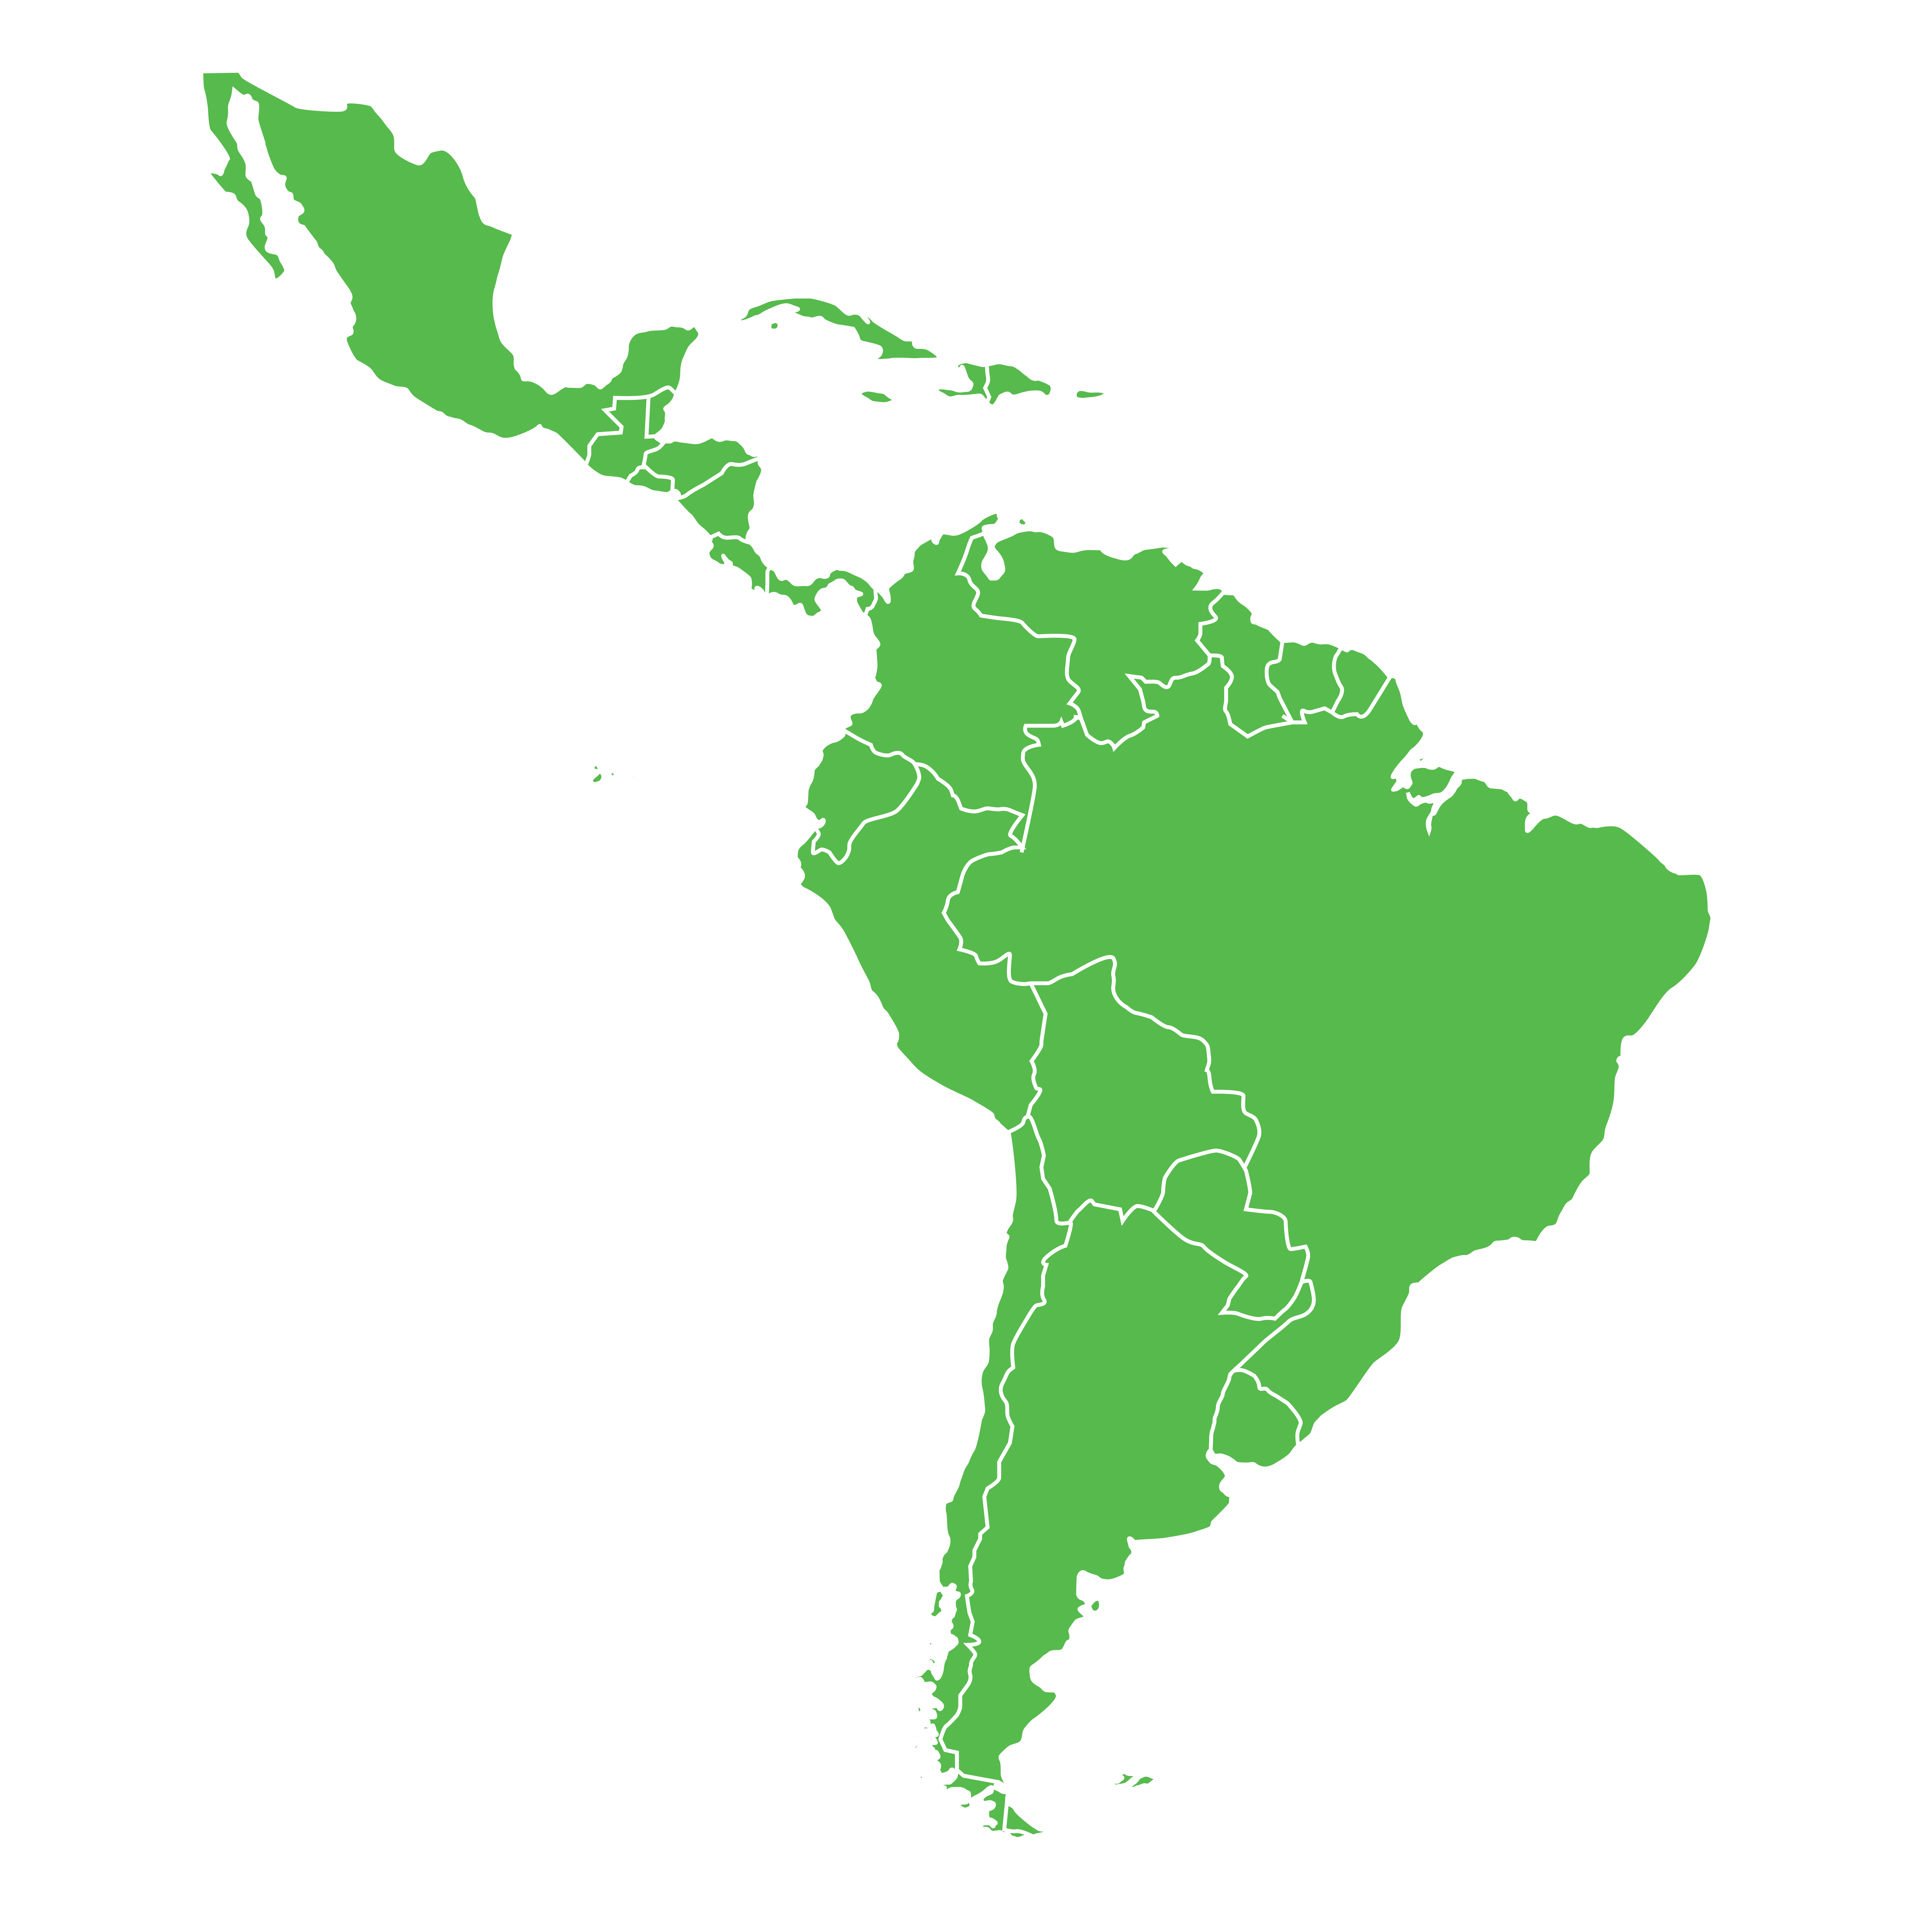 America And Latin America 17